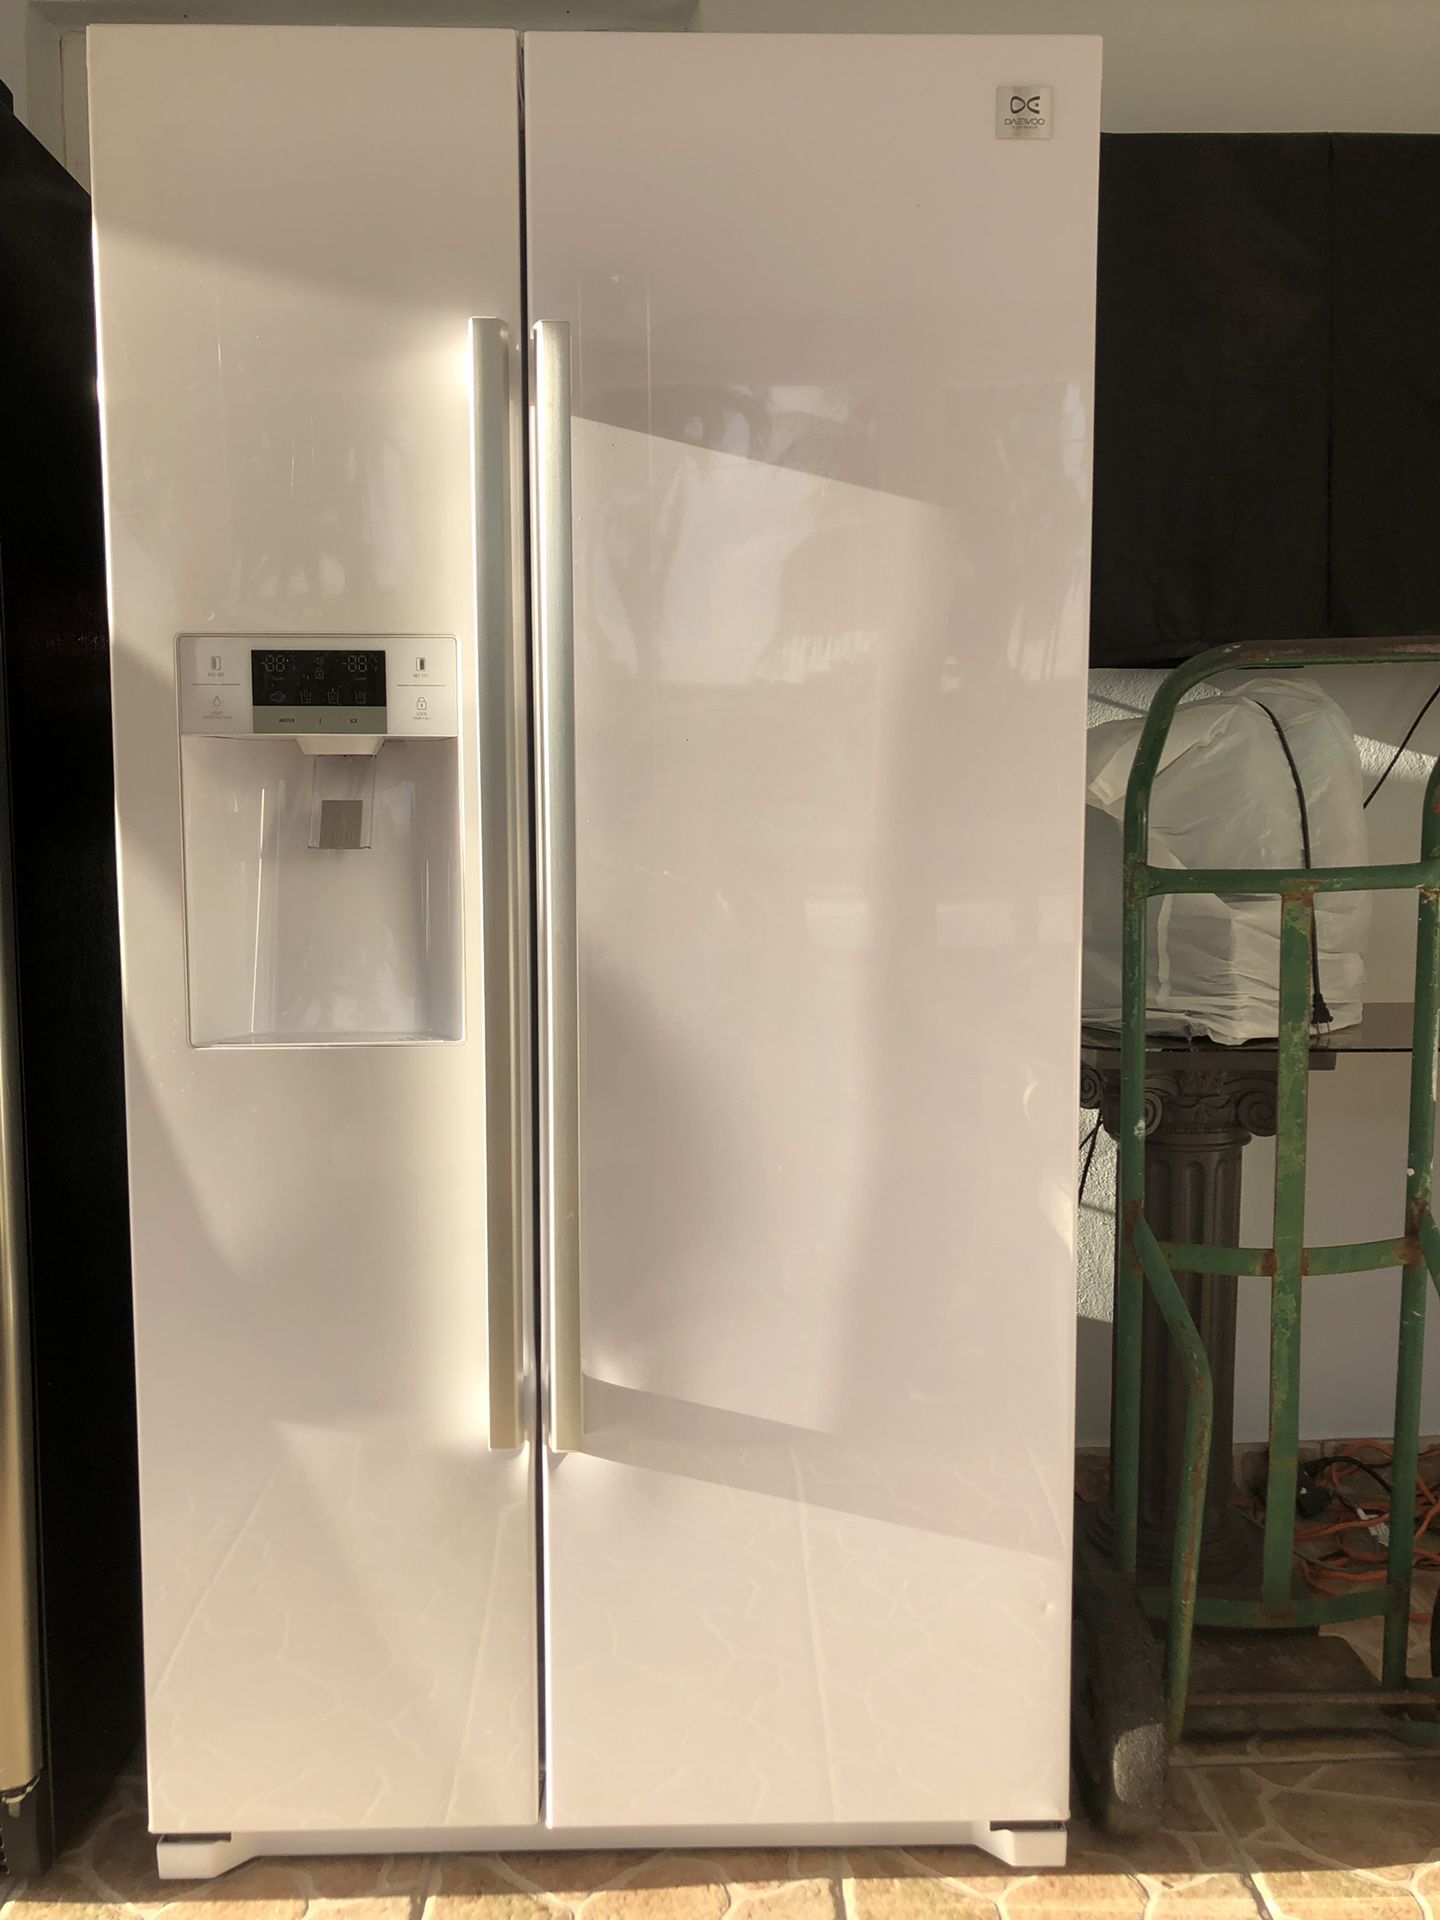 Daewood Refrigerator 36” wide Counter Depth